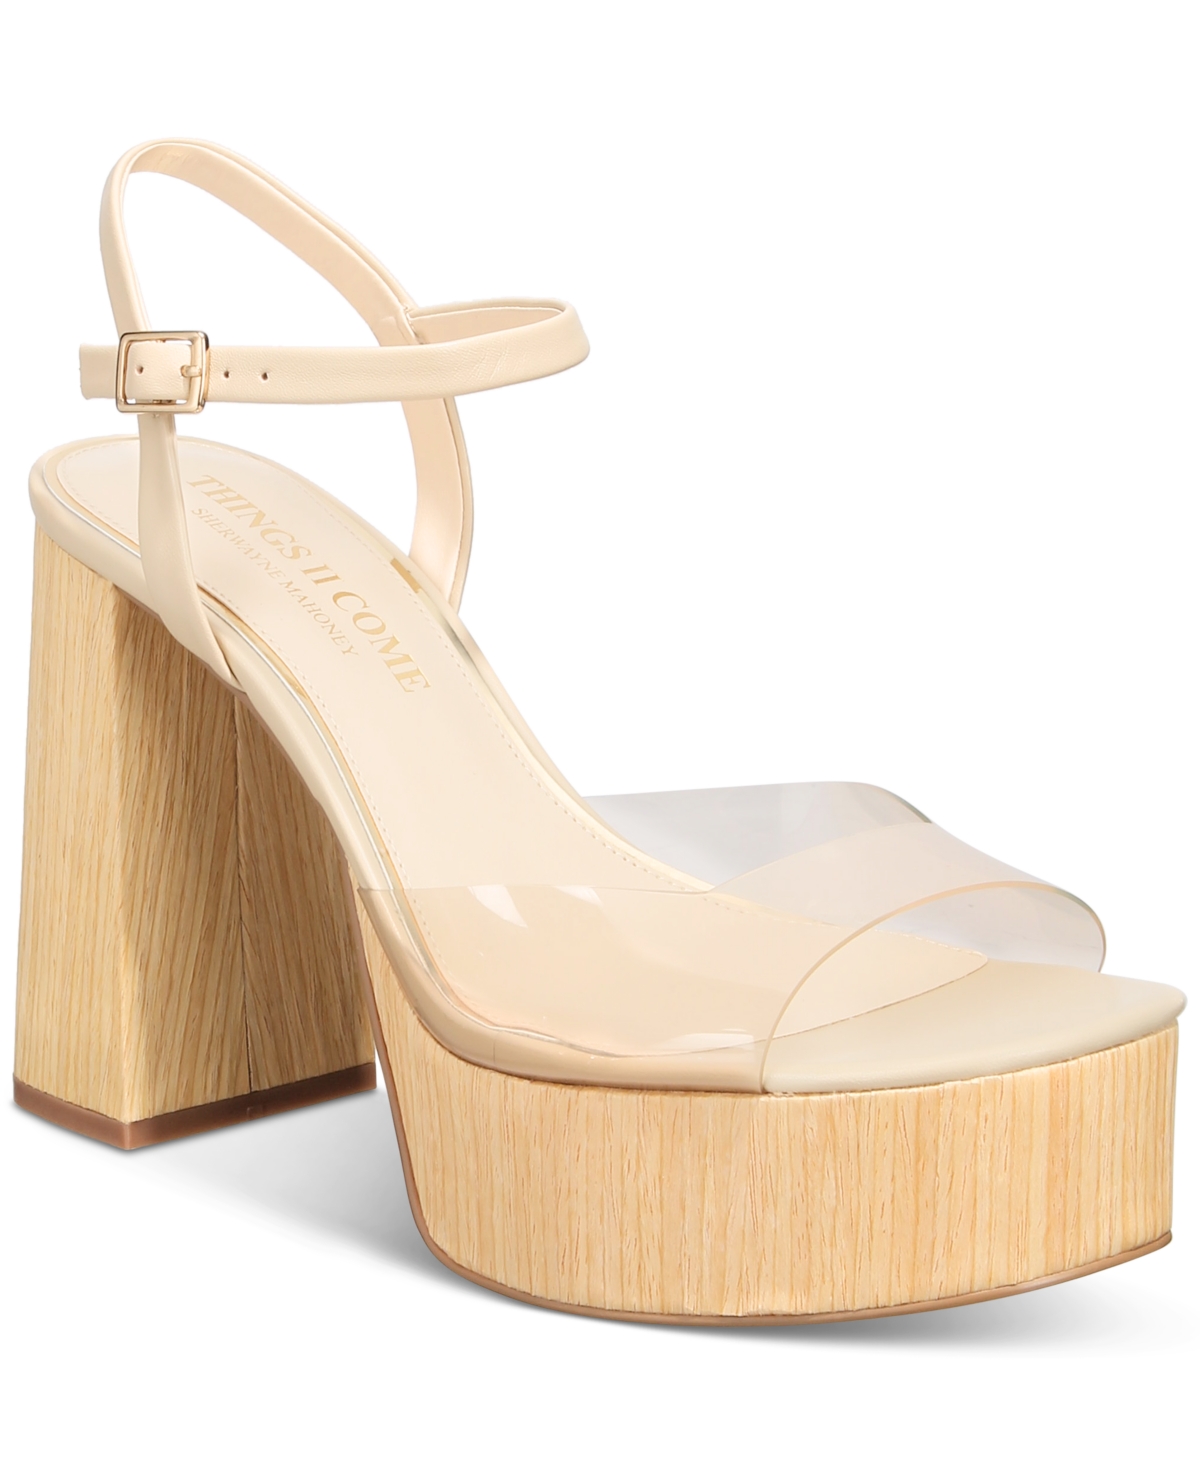 Shop Things Ii Come Women's Daceywood Luxurious Wood Platform Sandals In Bone